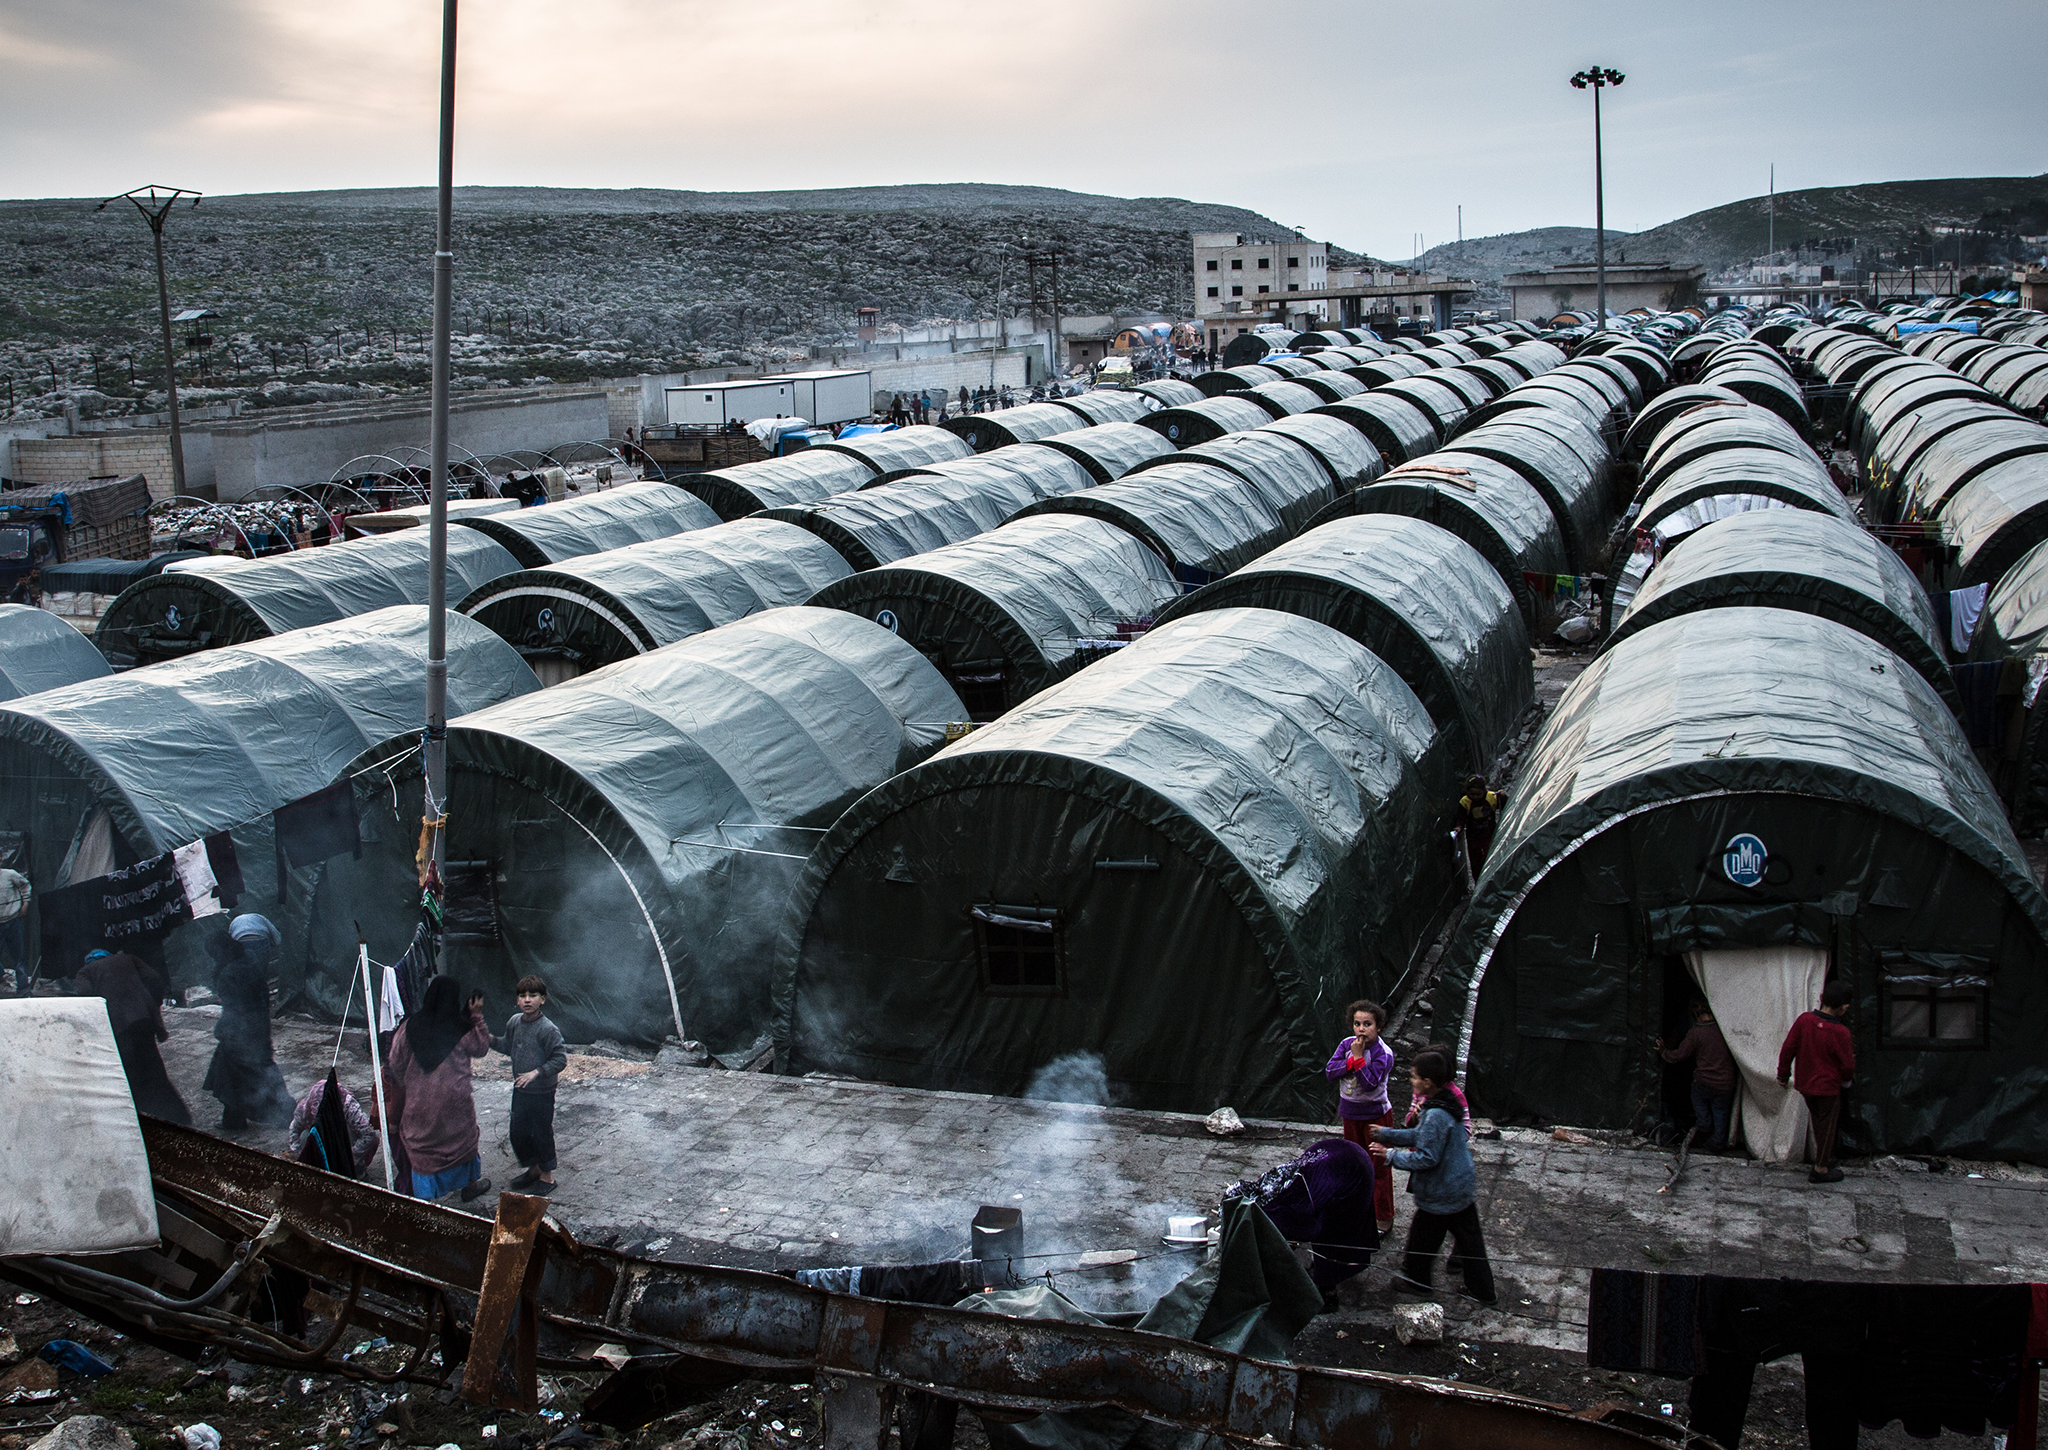 A refugee camp at the international border crossing Bab Al Hawa, between Syria and Turkey (Chris Huby/MSF)